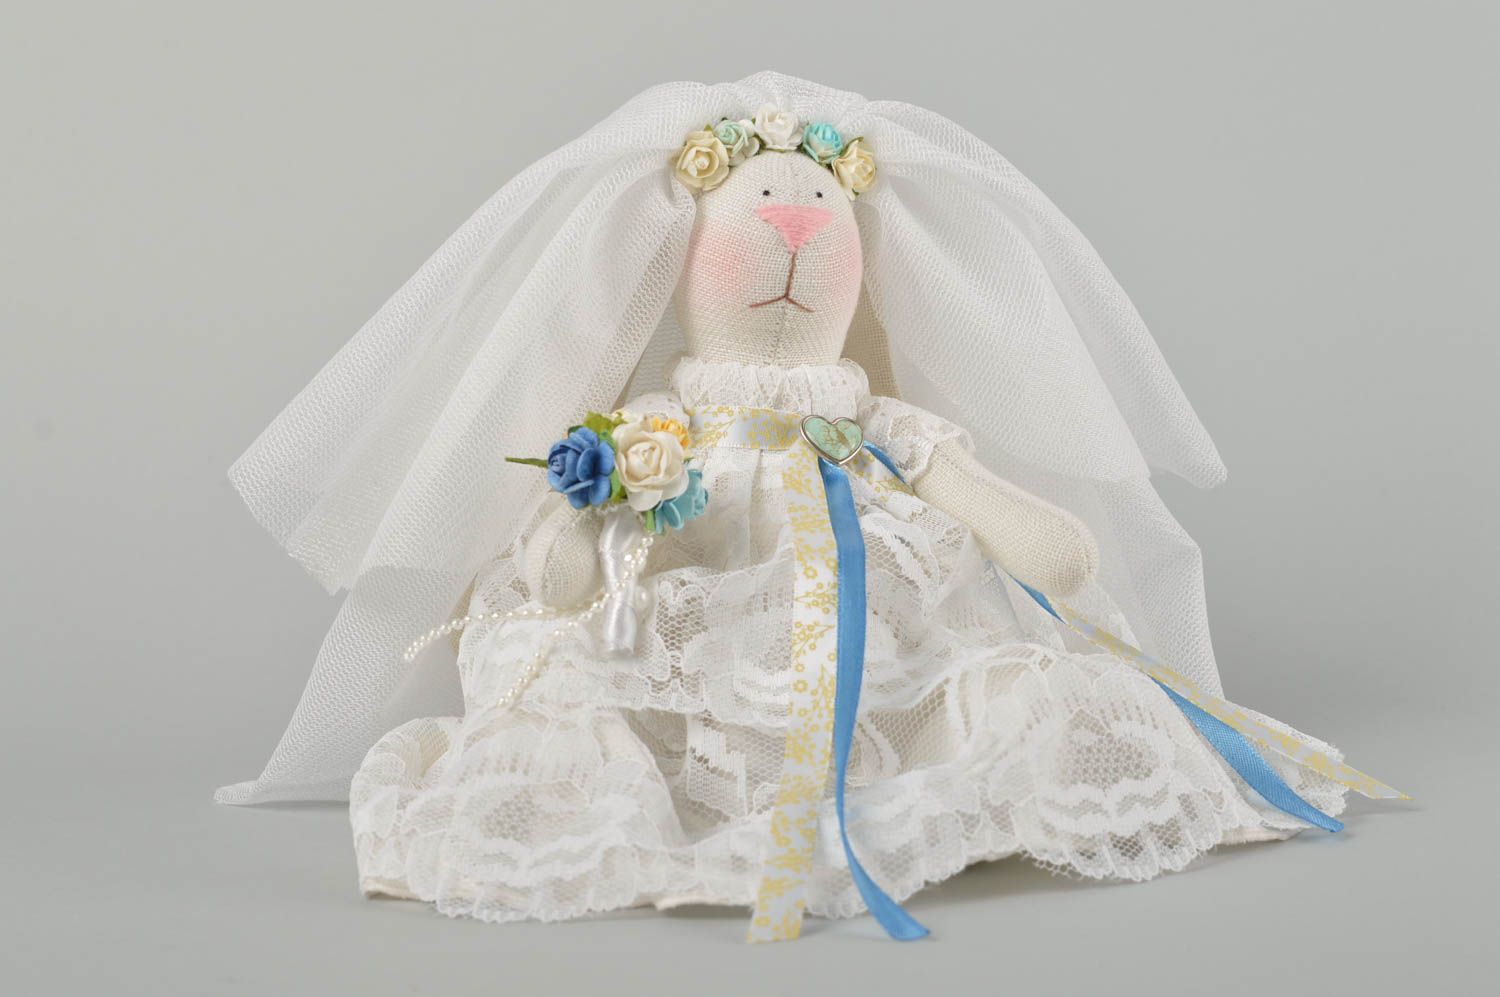 Handmade wedding rabbit unusual soft toy bride stylish wedding decor ideas photo 2